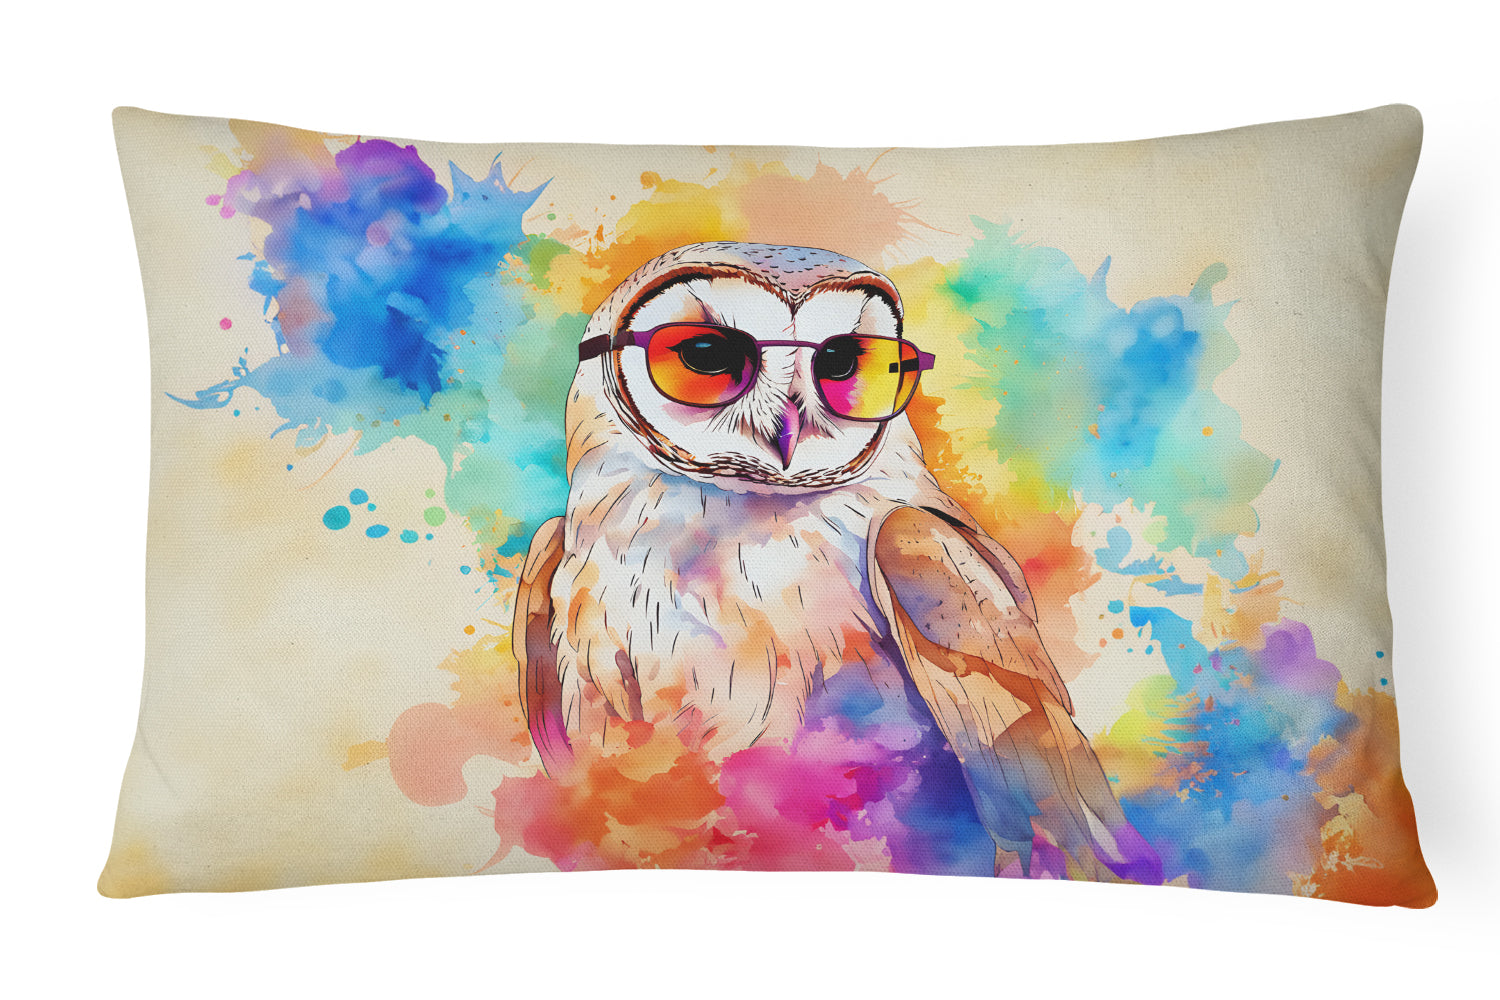 Buy this Hippie Animal Barn Owl Throw Pillow